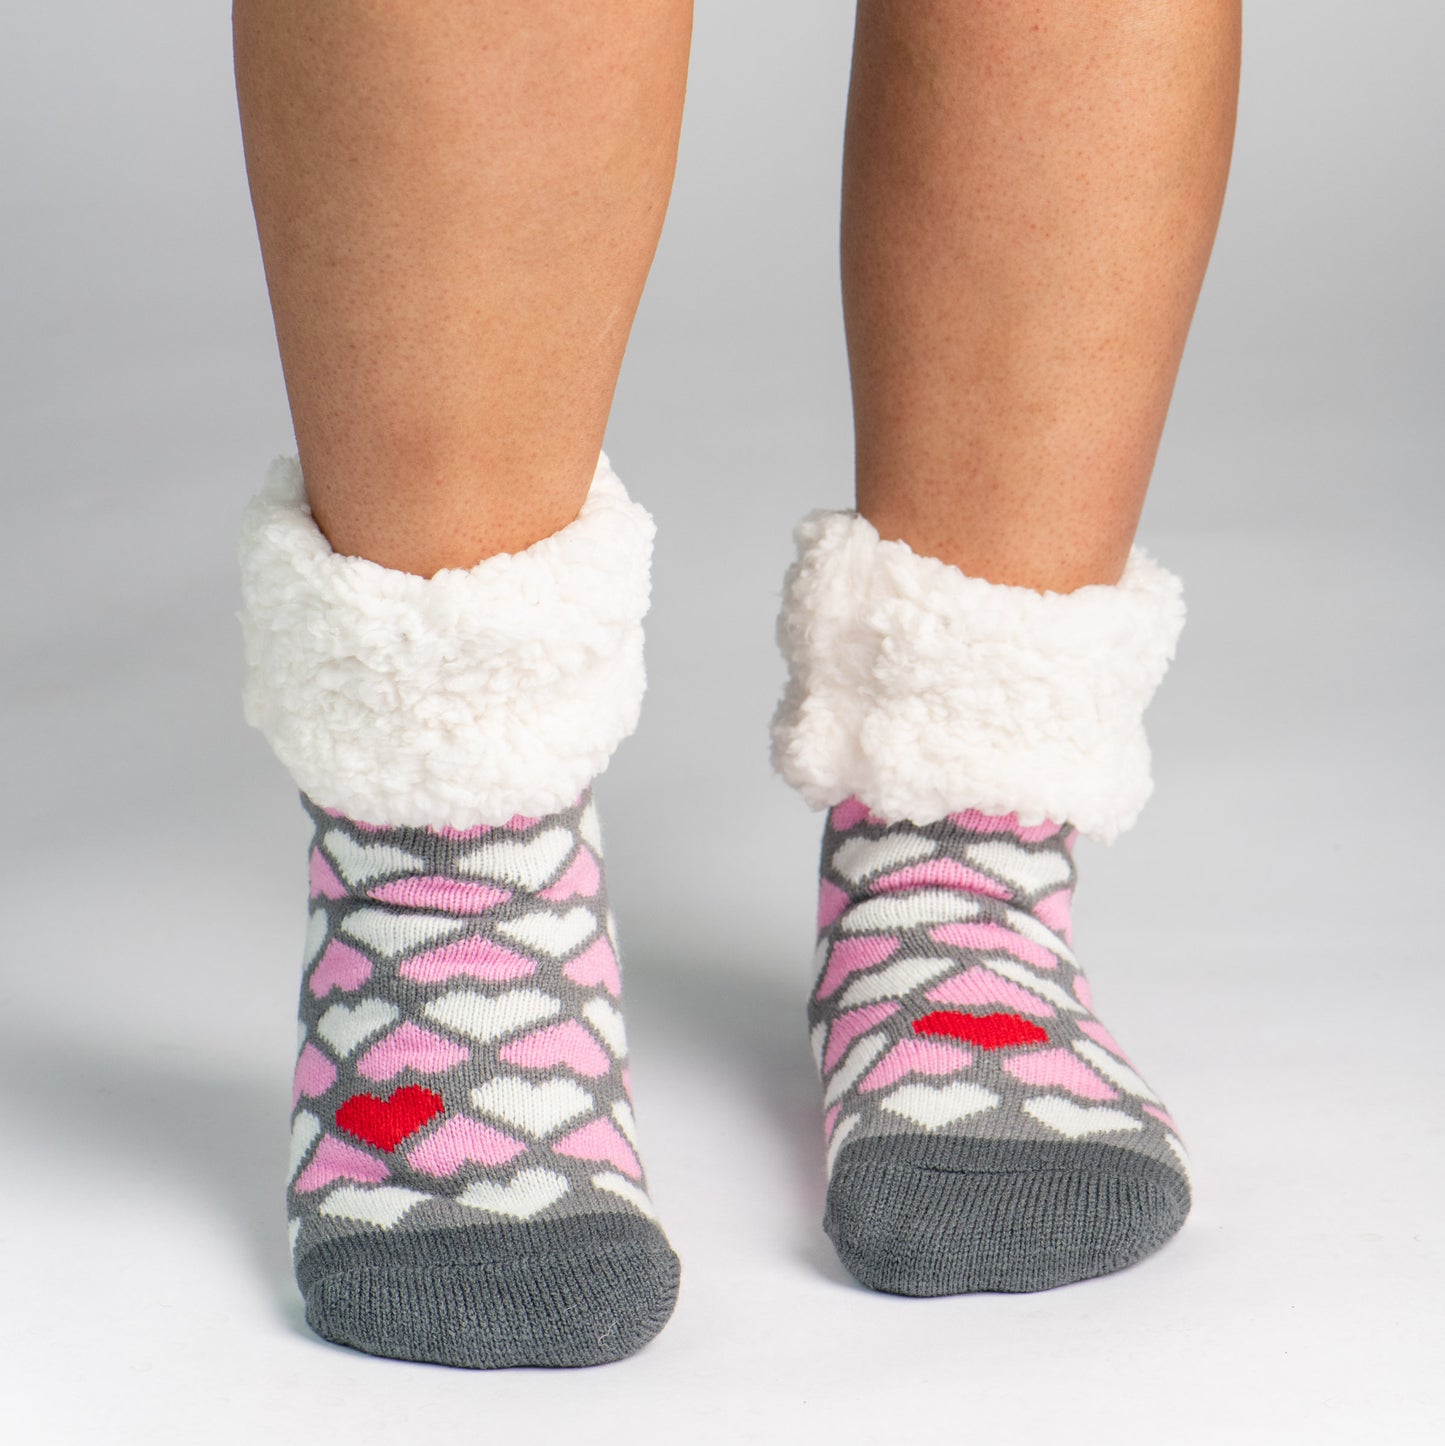 Classic Slipper Socks | Heart Valentine